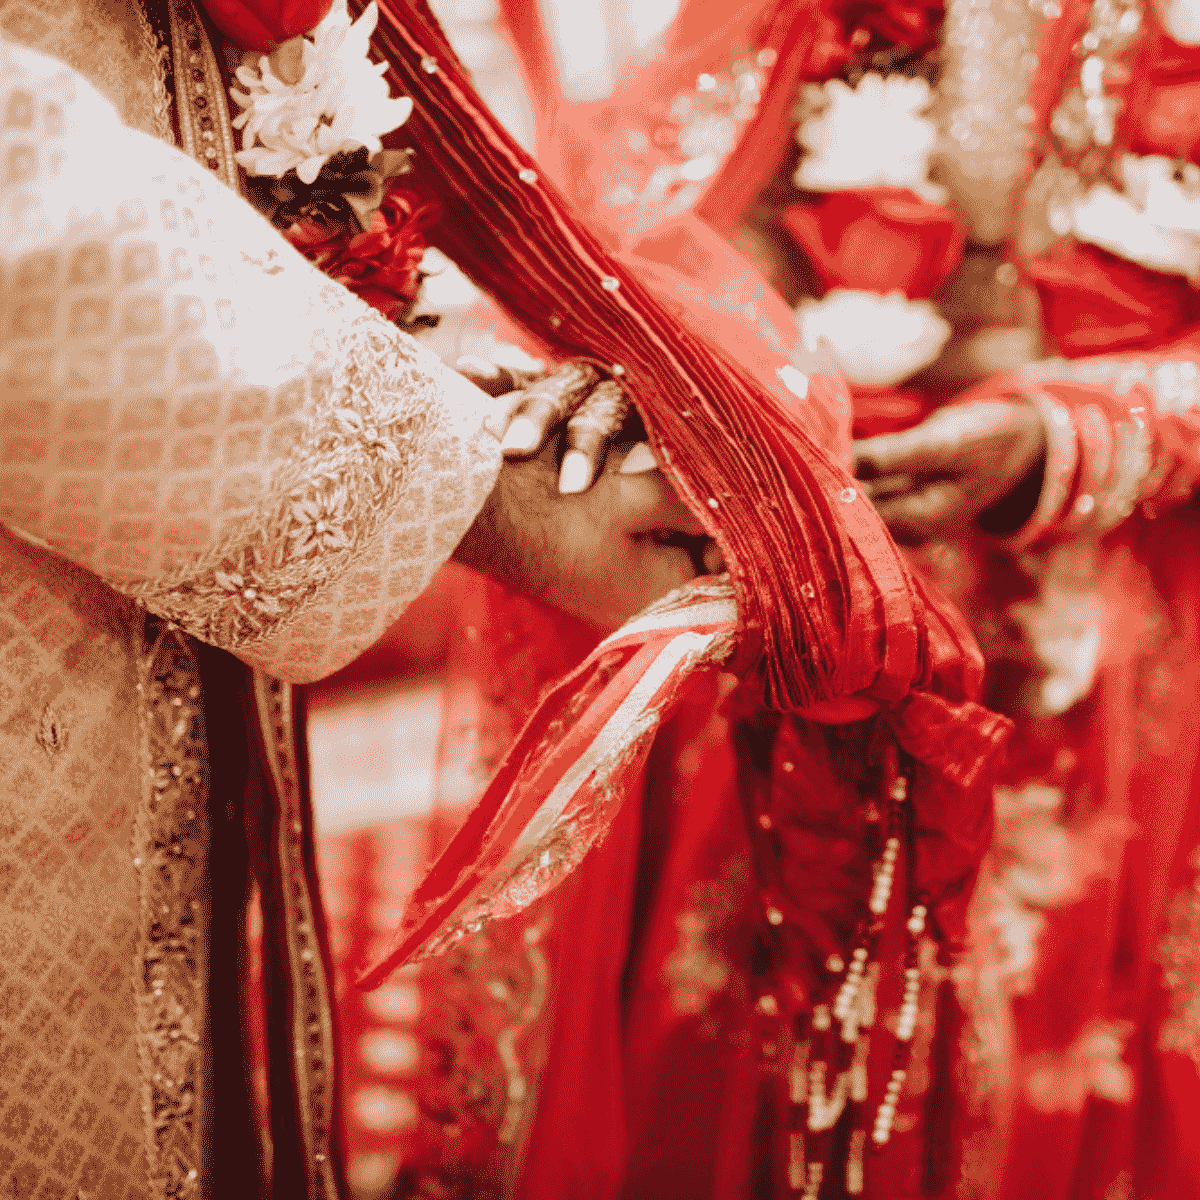 Gujarati Wedding